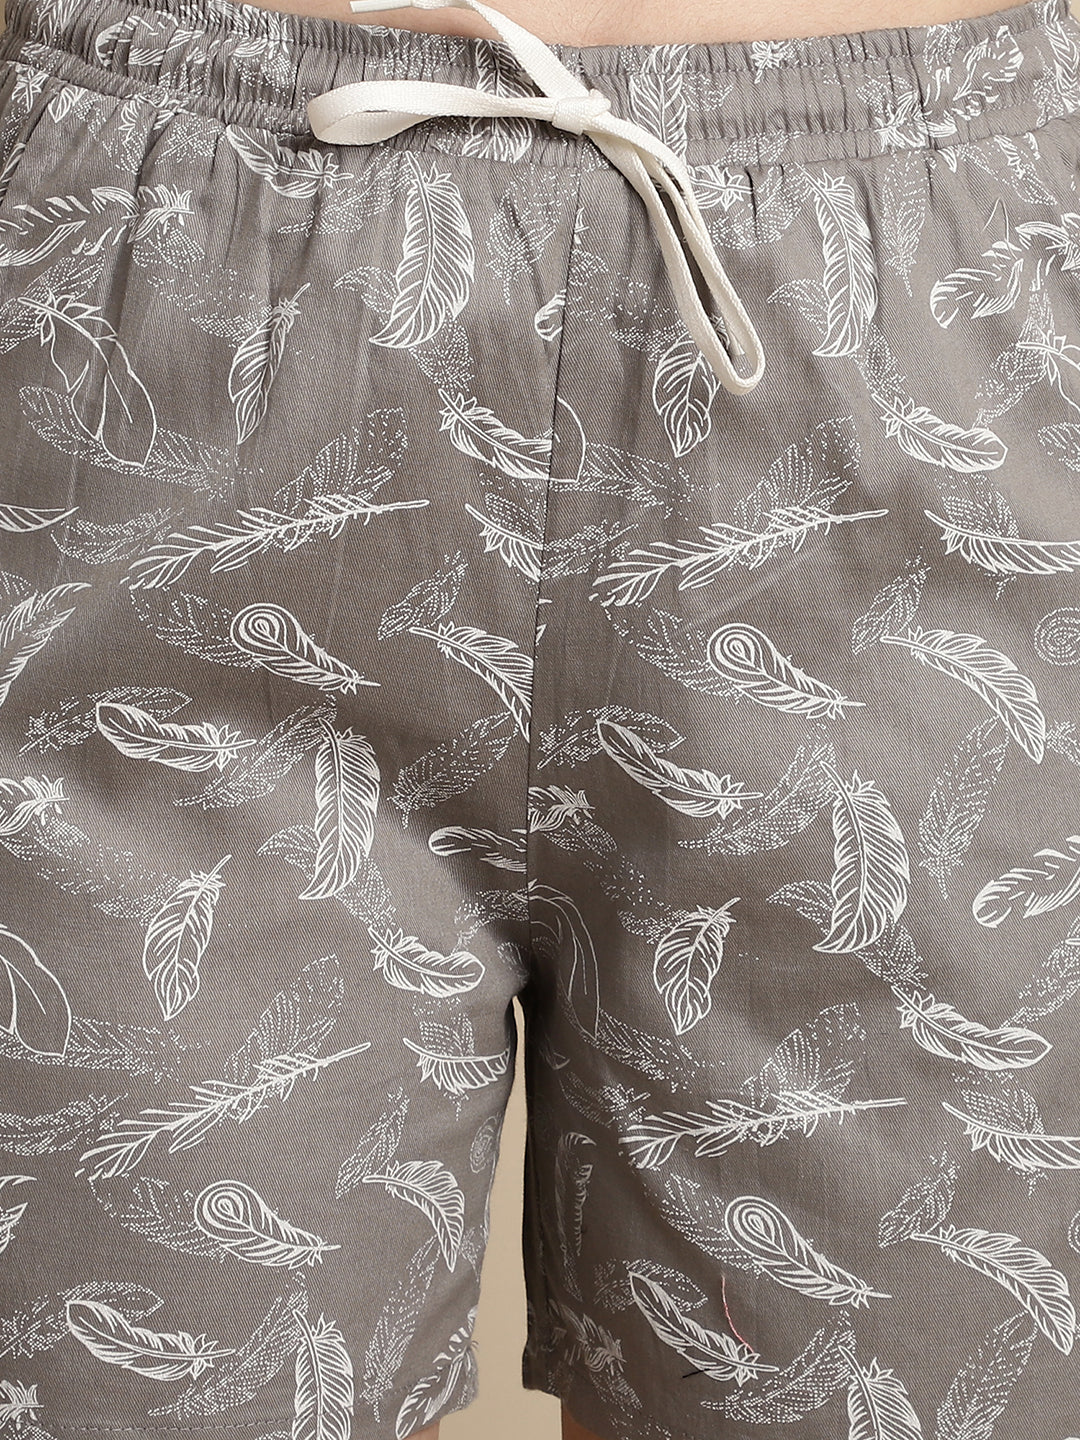 Grey Color Abstract Printed Viscose Rayon Shorts For Women Claura Designs Pvt. Ltd. Lounge Shorts Abstract Printed, Grey, Lounge Short, Loungeshort_size, Printed, Rayon, Shorts